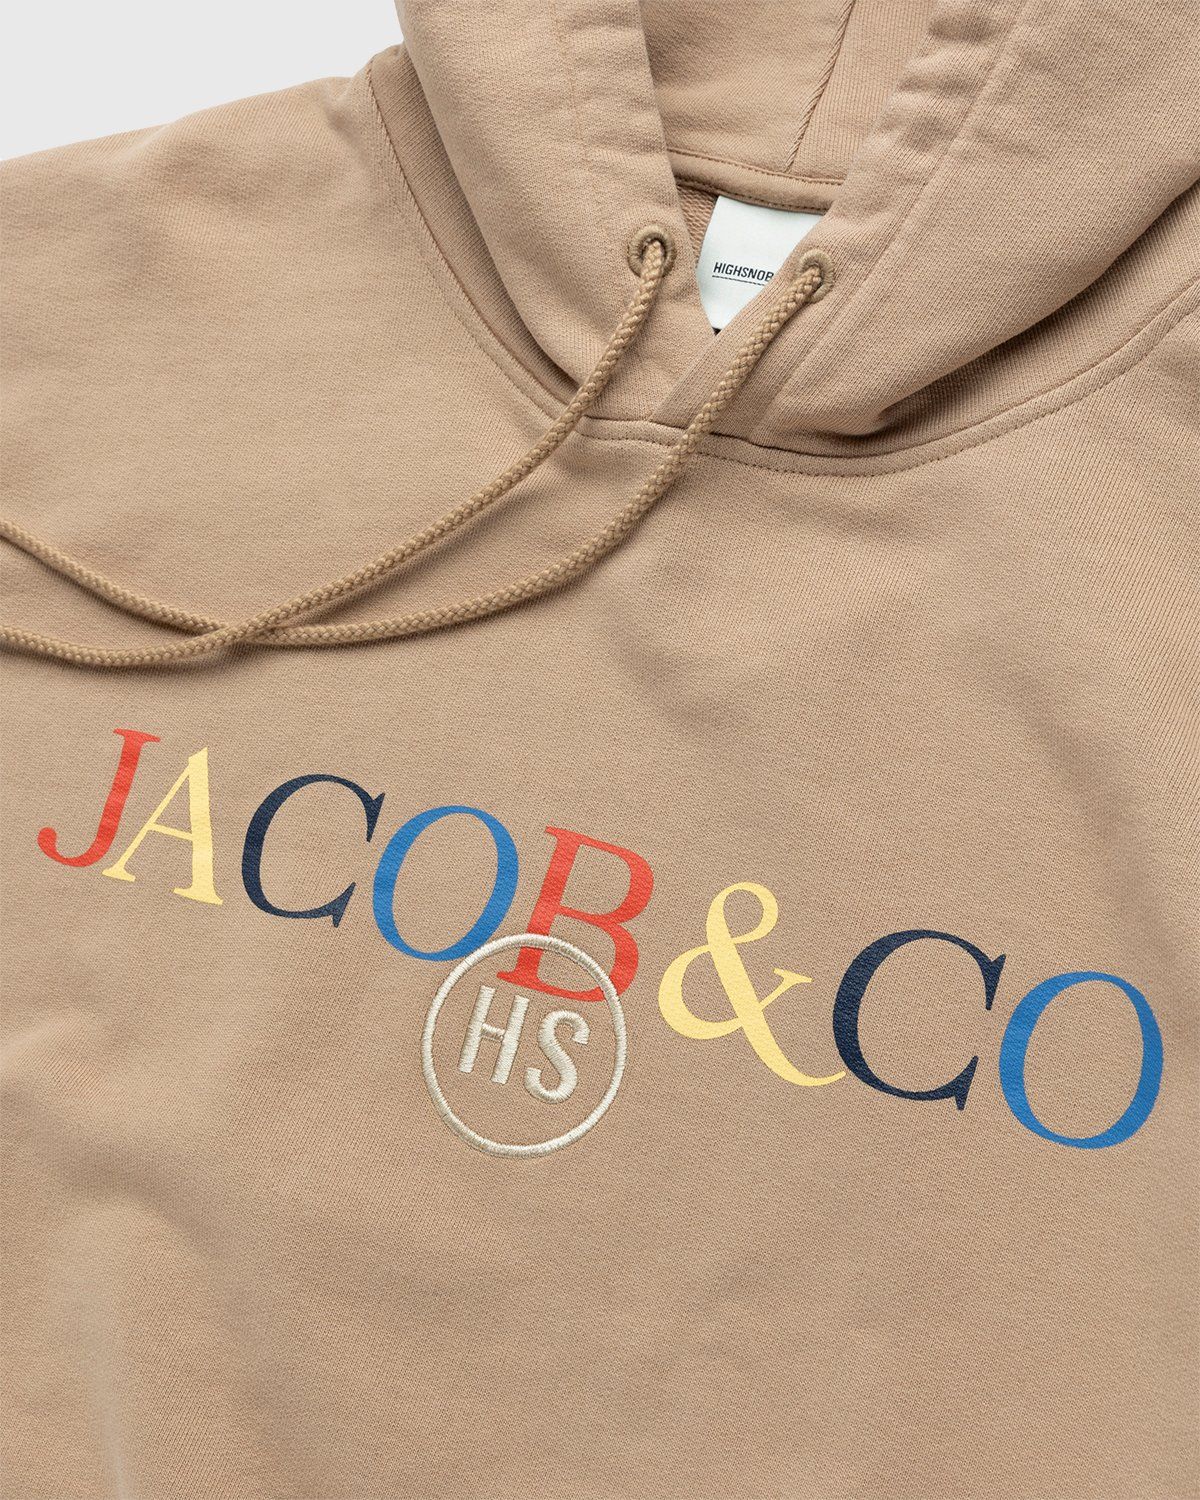 Jacob & Co. x Highsnobiety – Multicolor Logo Fleece Hoodie Brown - Image 5